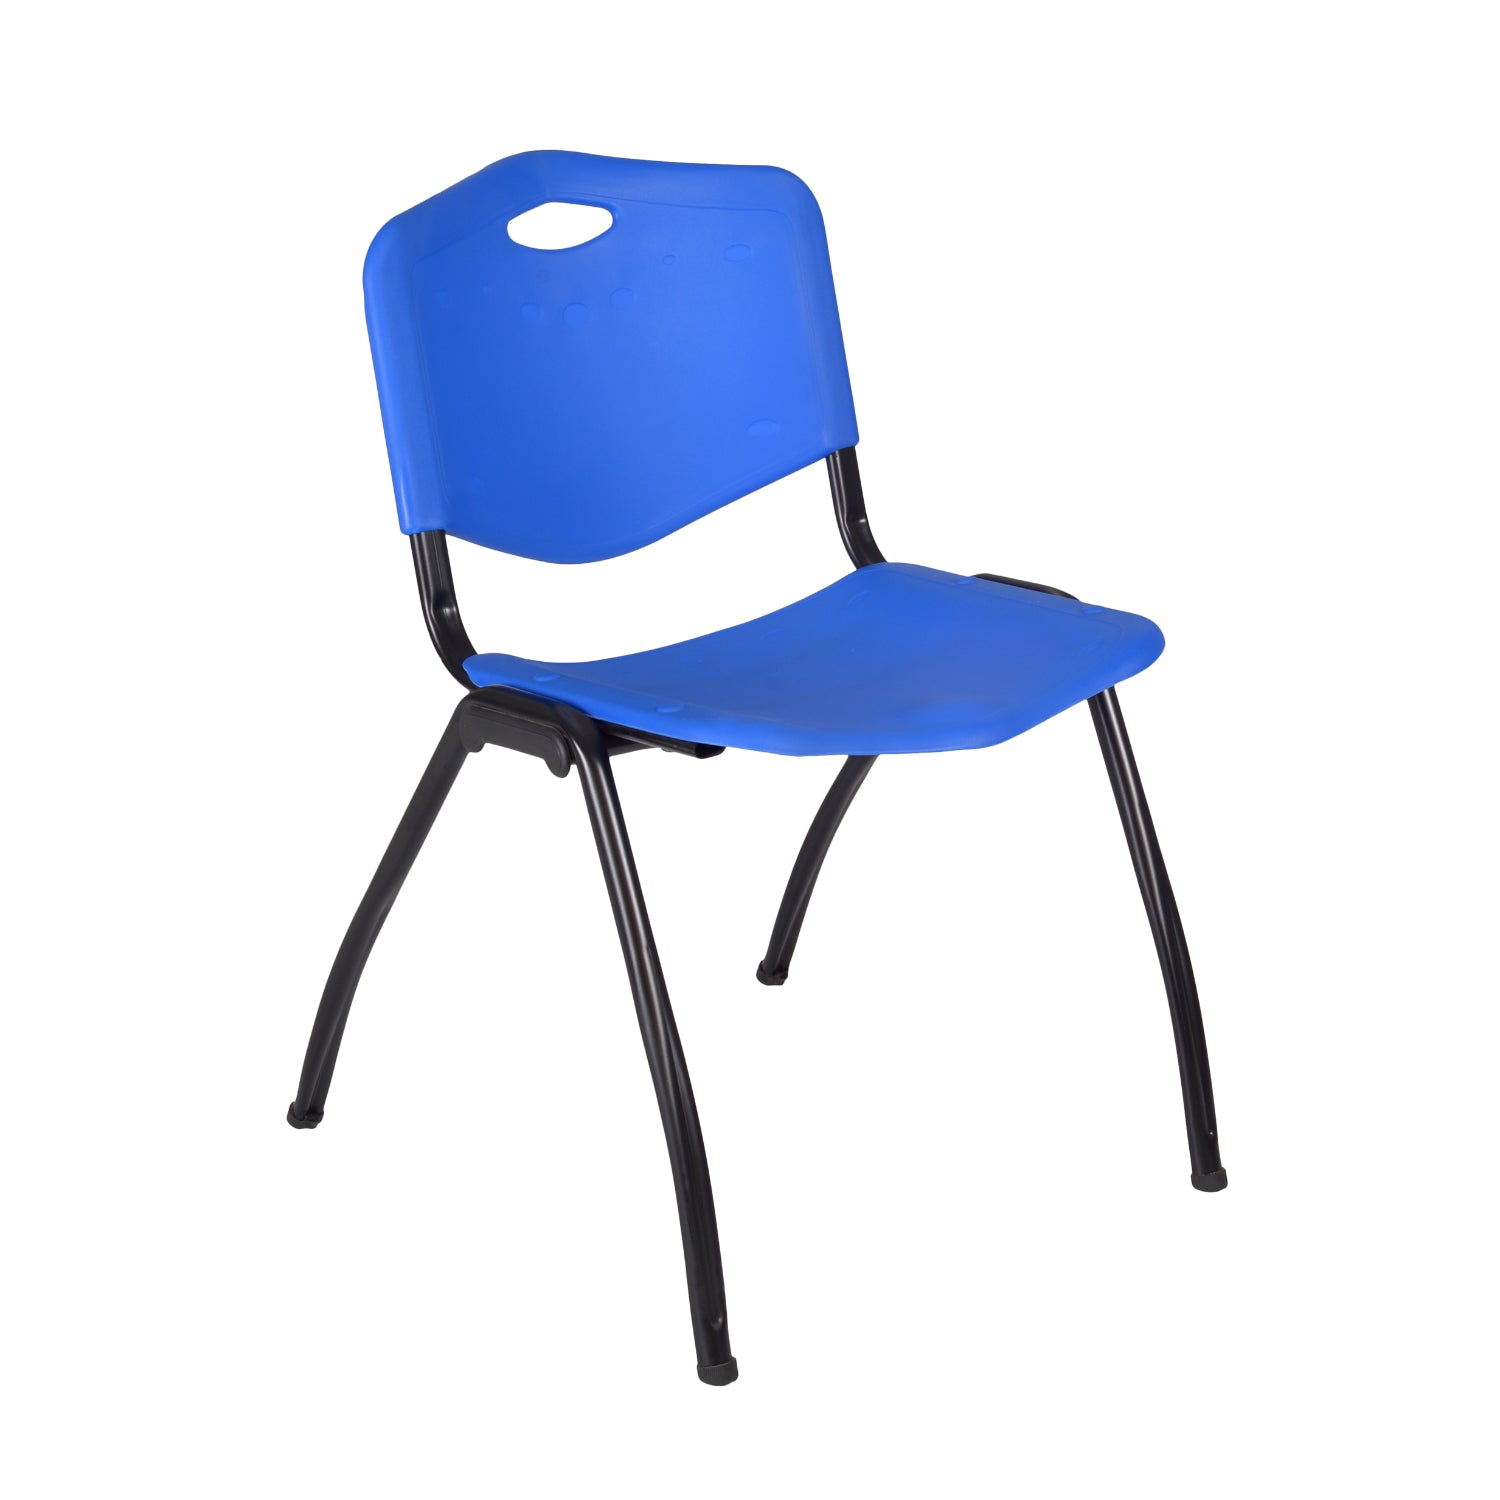 "M" Lightweight Stacking Chair